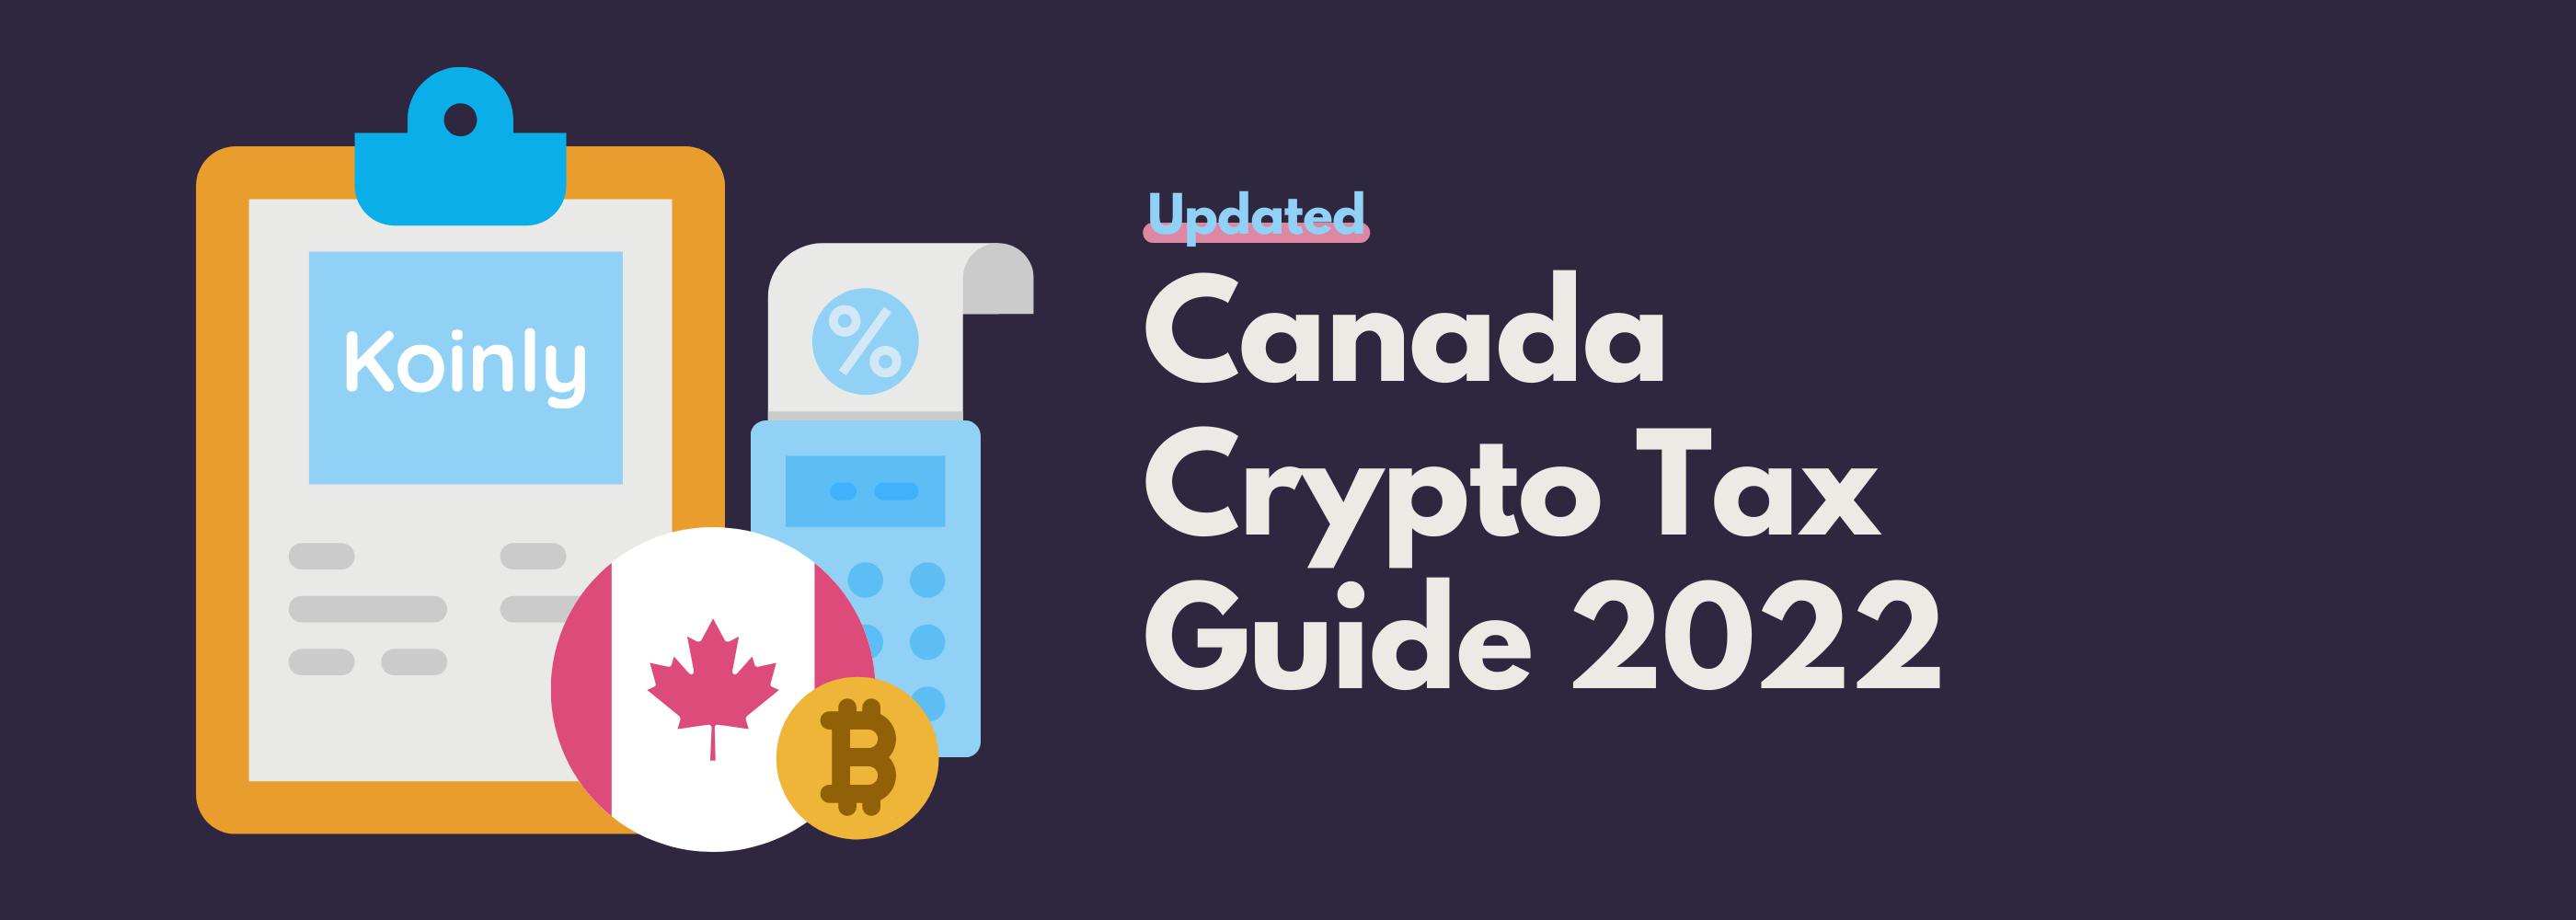 Canada Crypto Tax Guide